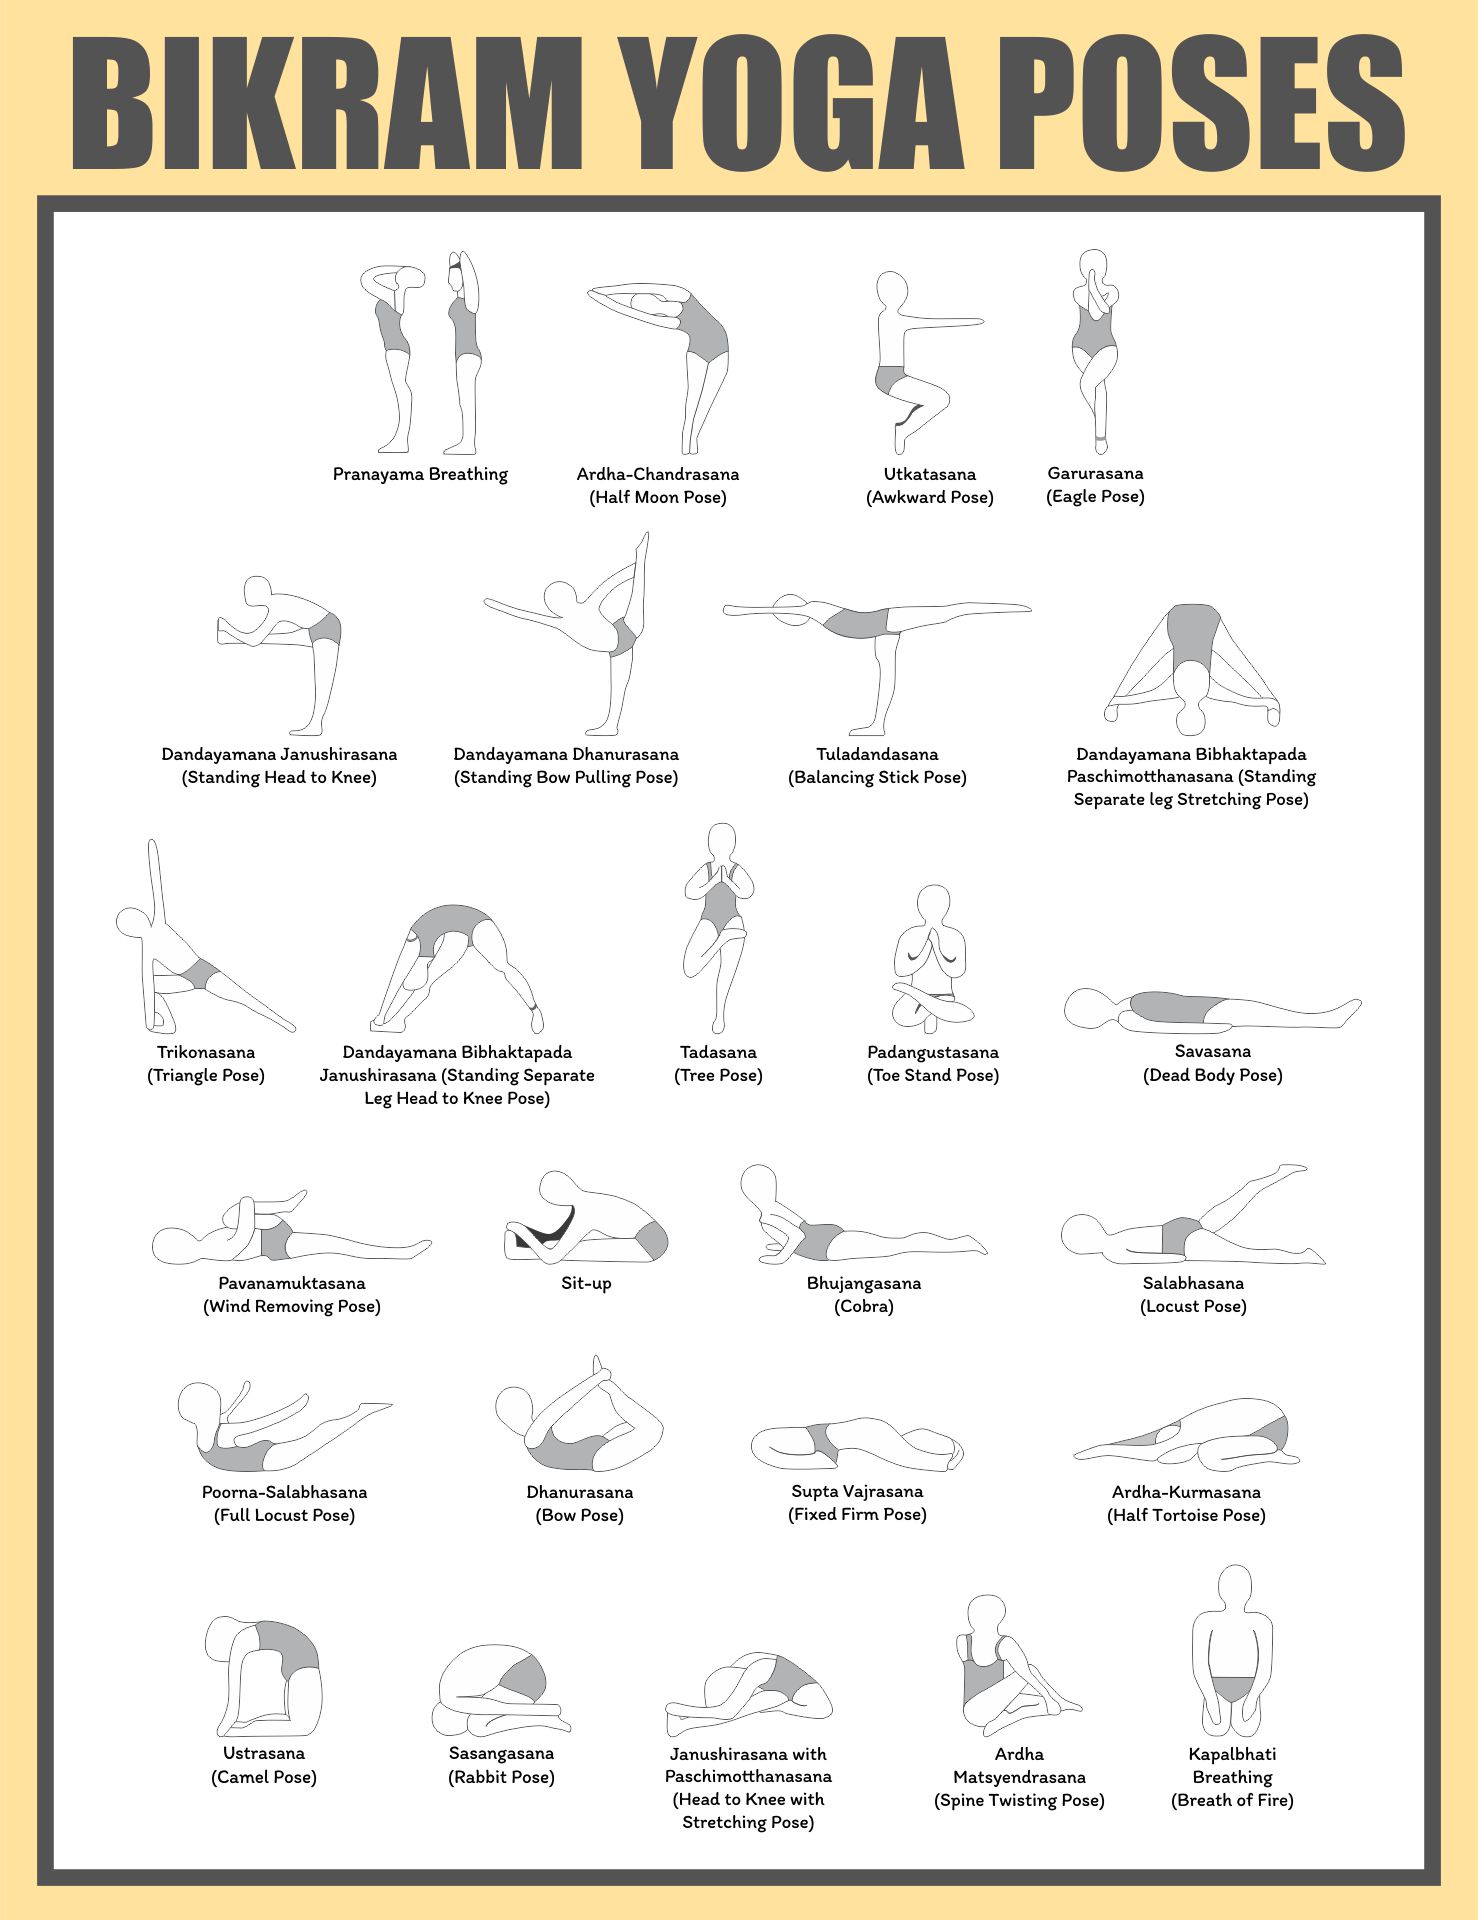 Postures - Yoga is Medicine - Bikram Yoga